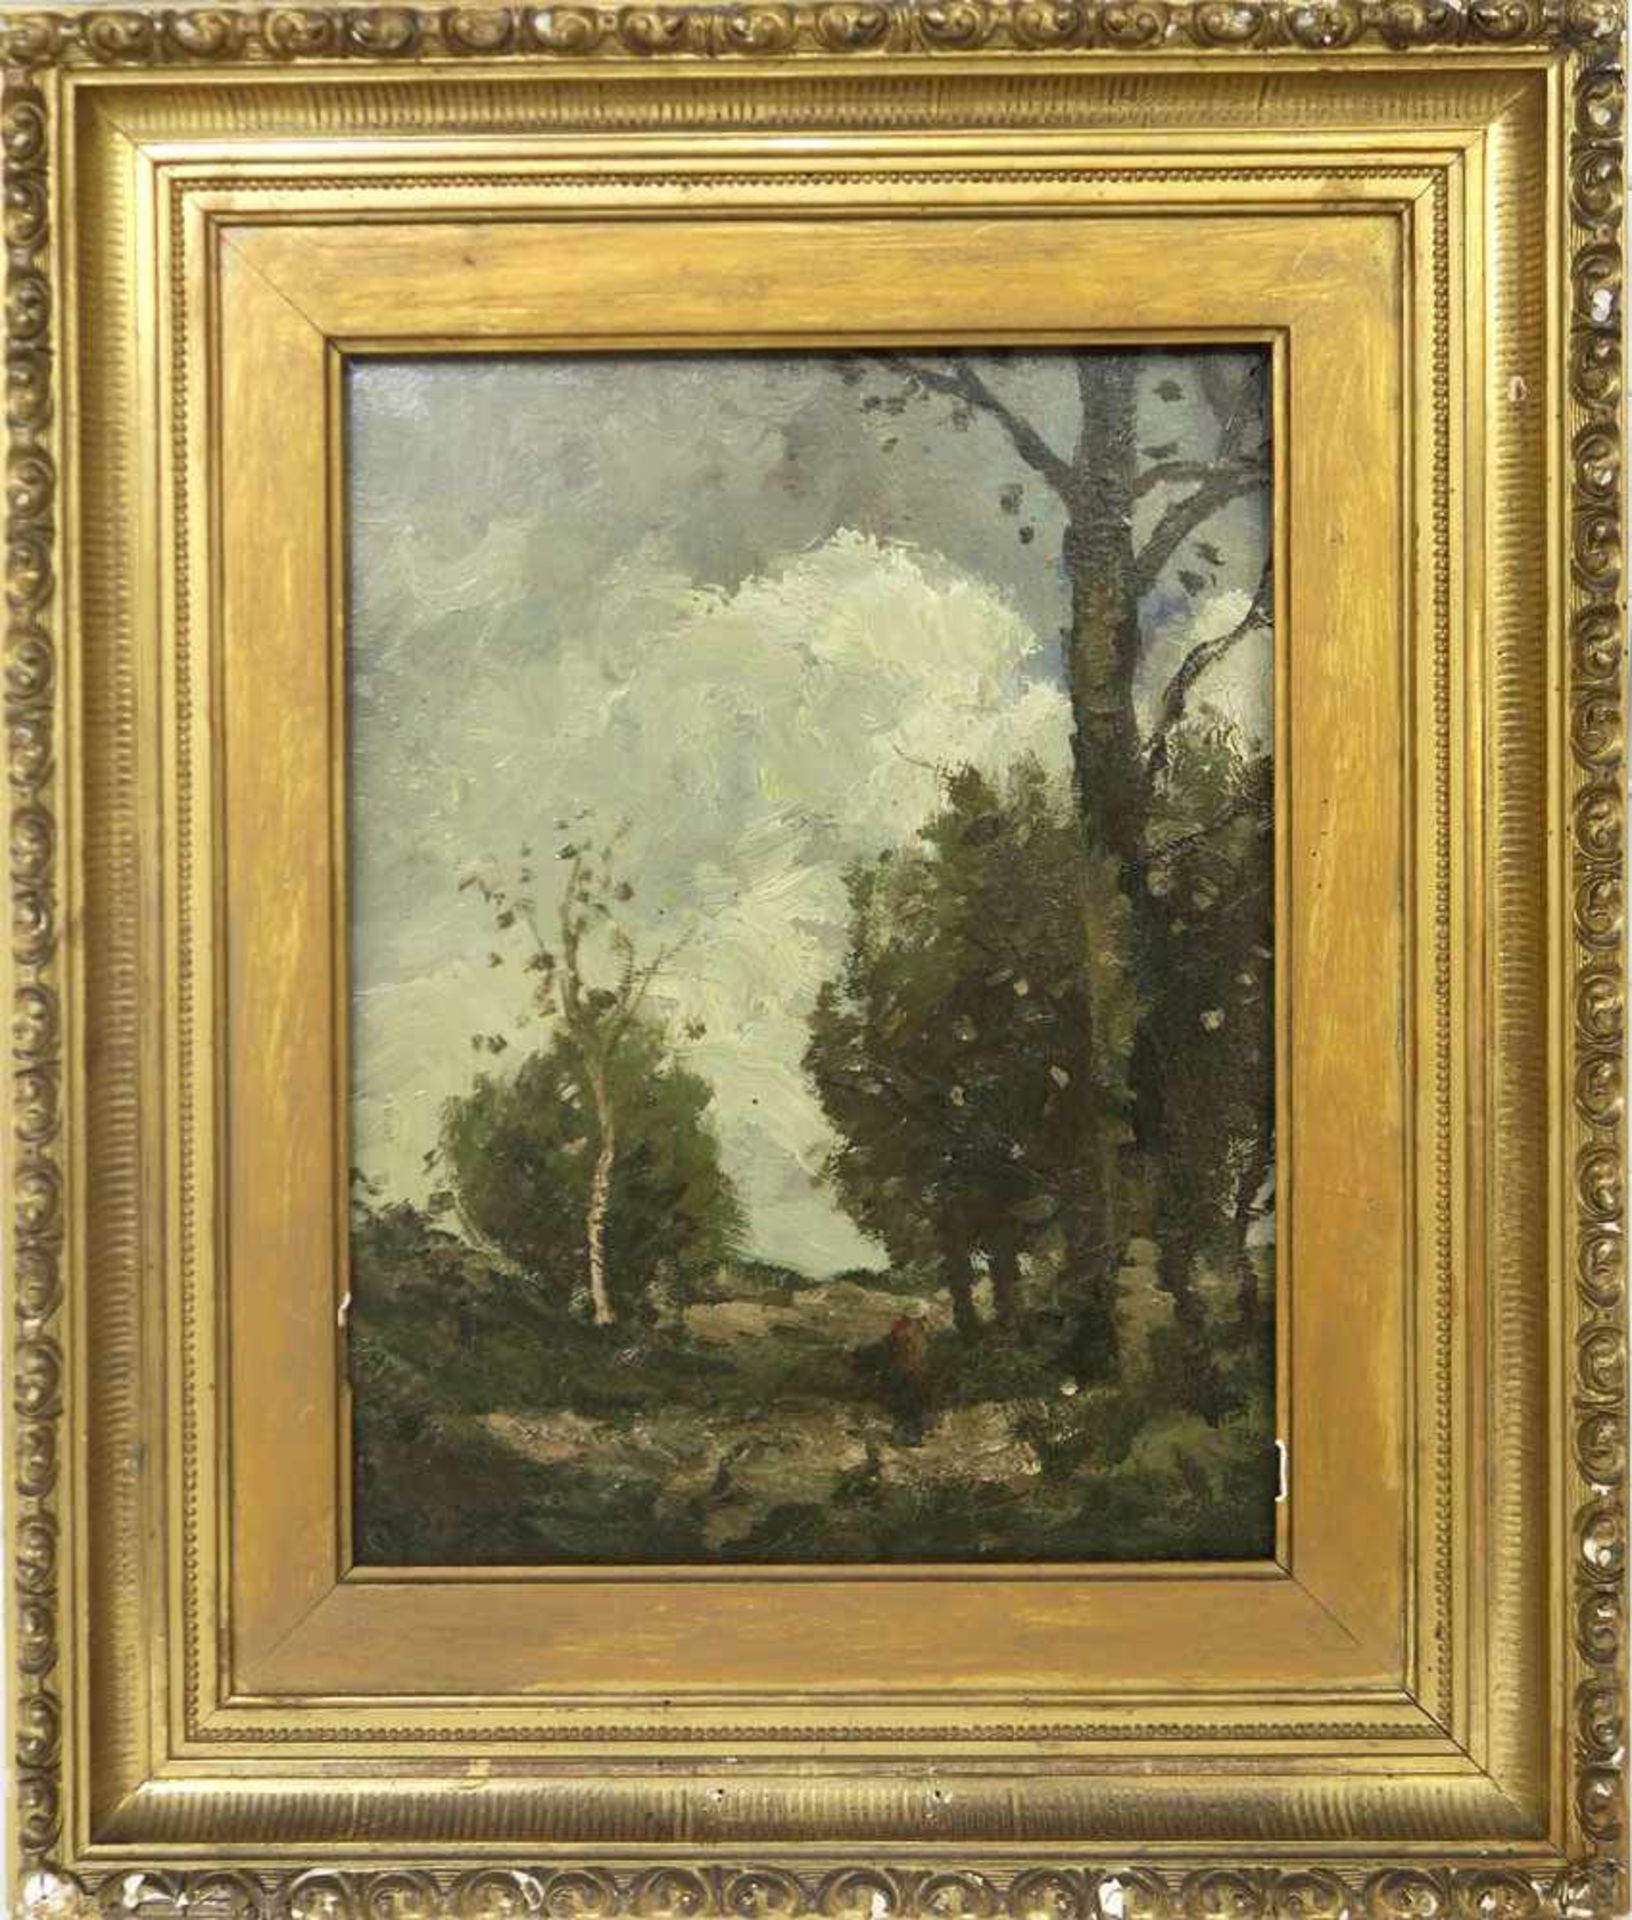 Bock, Théophile de1851 Den Haag - 1904 HaarlemFrau am WaldrandÖl/Holz. 31 x 26 cm. L. u. signiert.